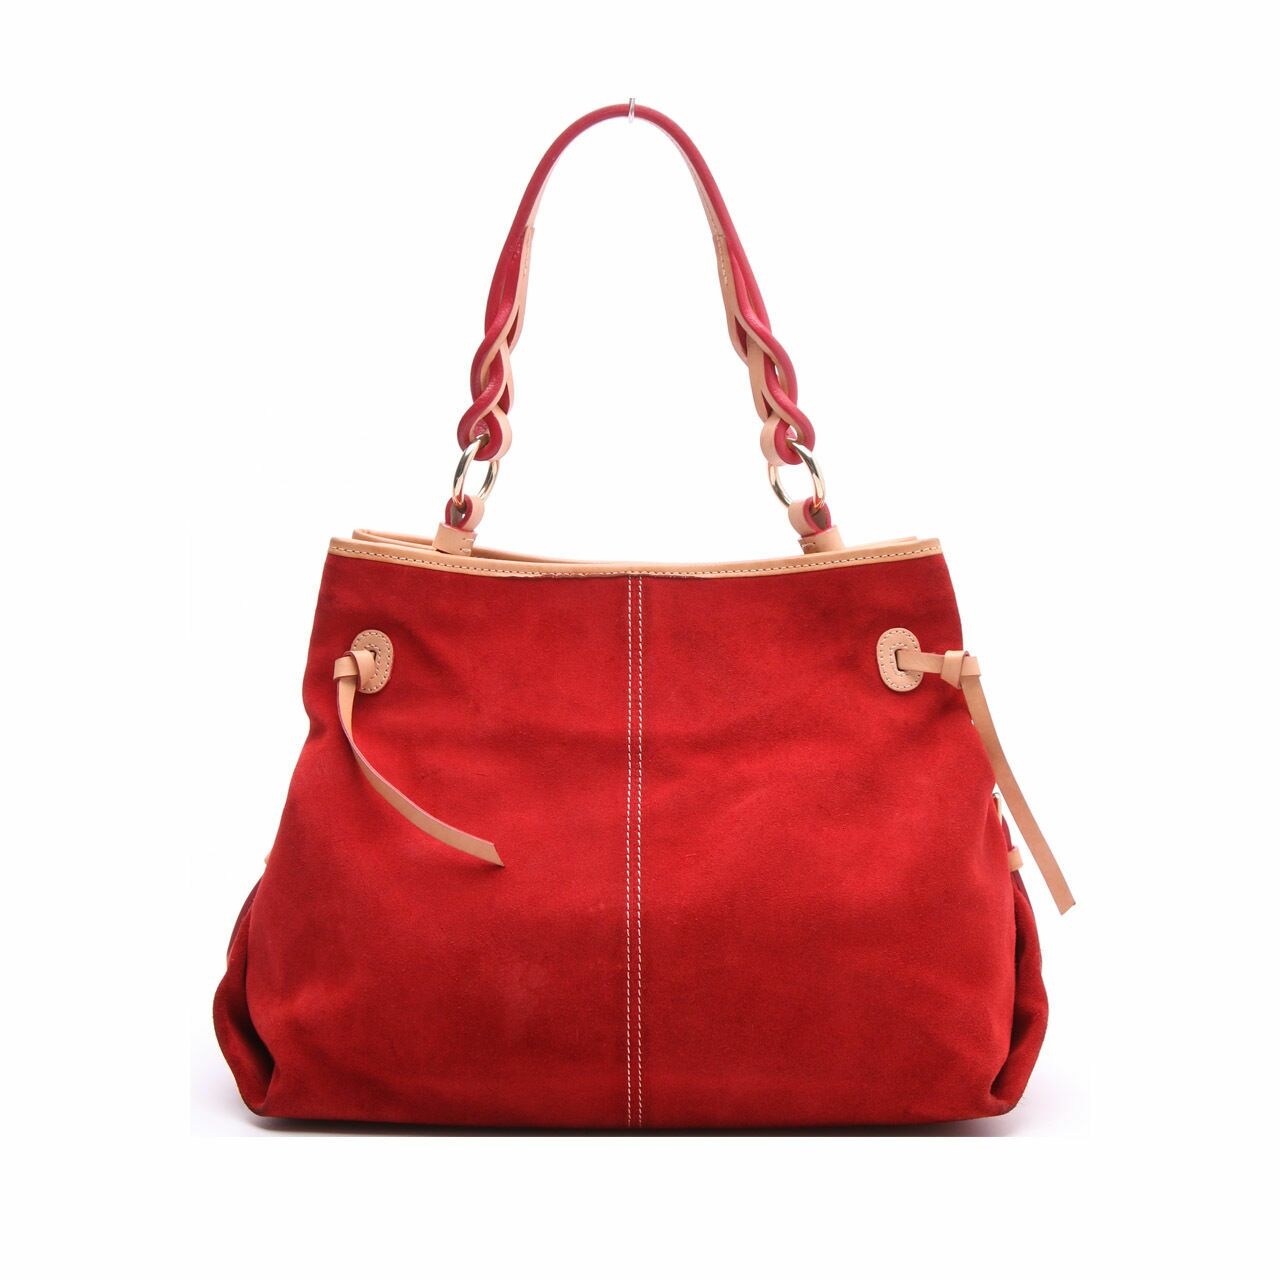 Dooney & Bourke Red Suede Shoulder Bag 